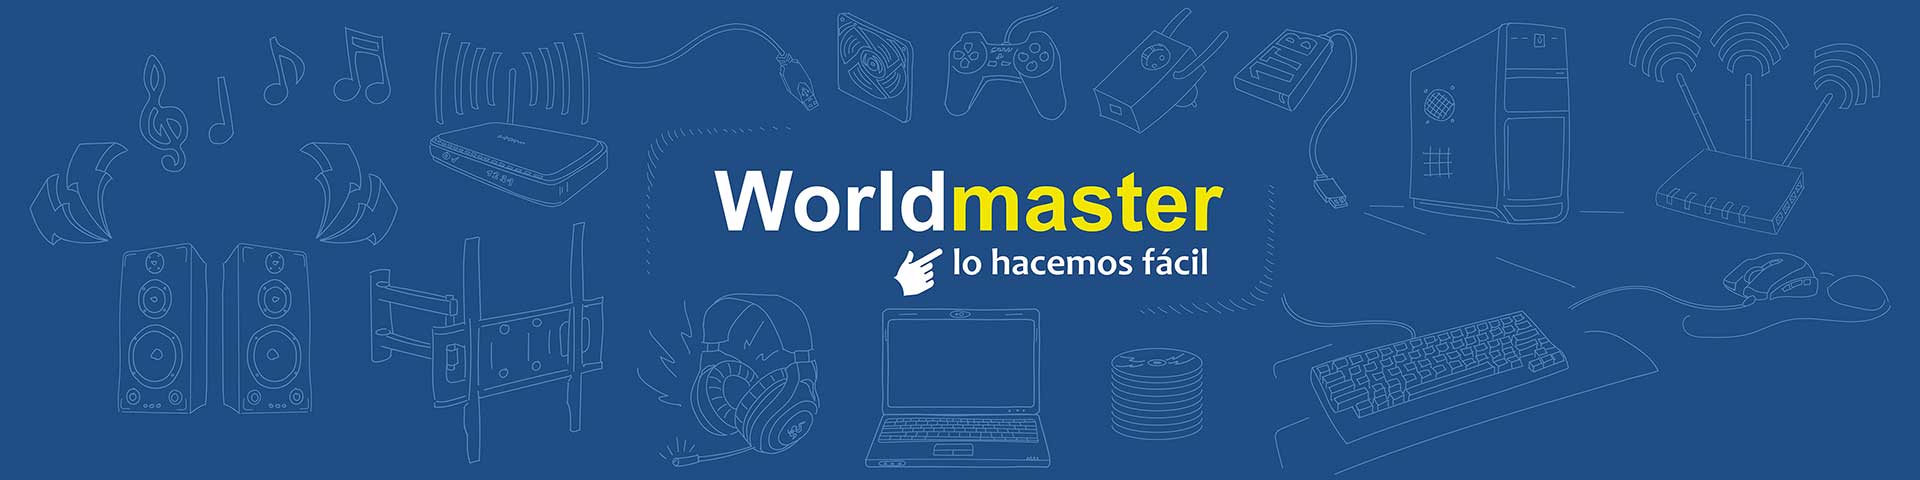 worldmaster-uruguay-baner